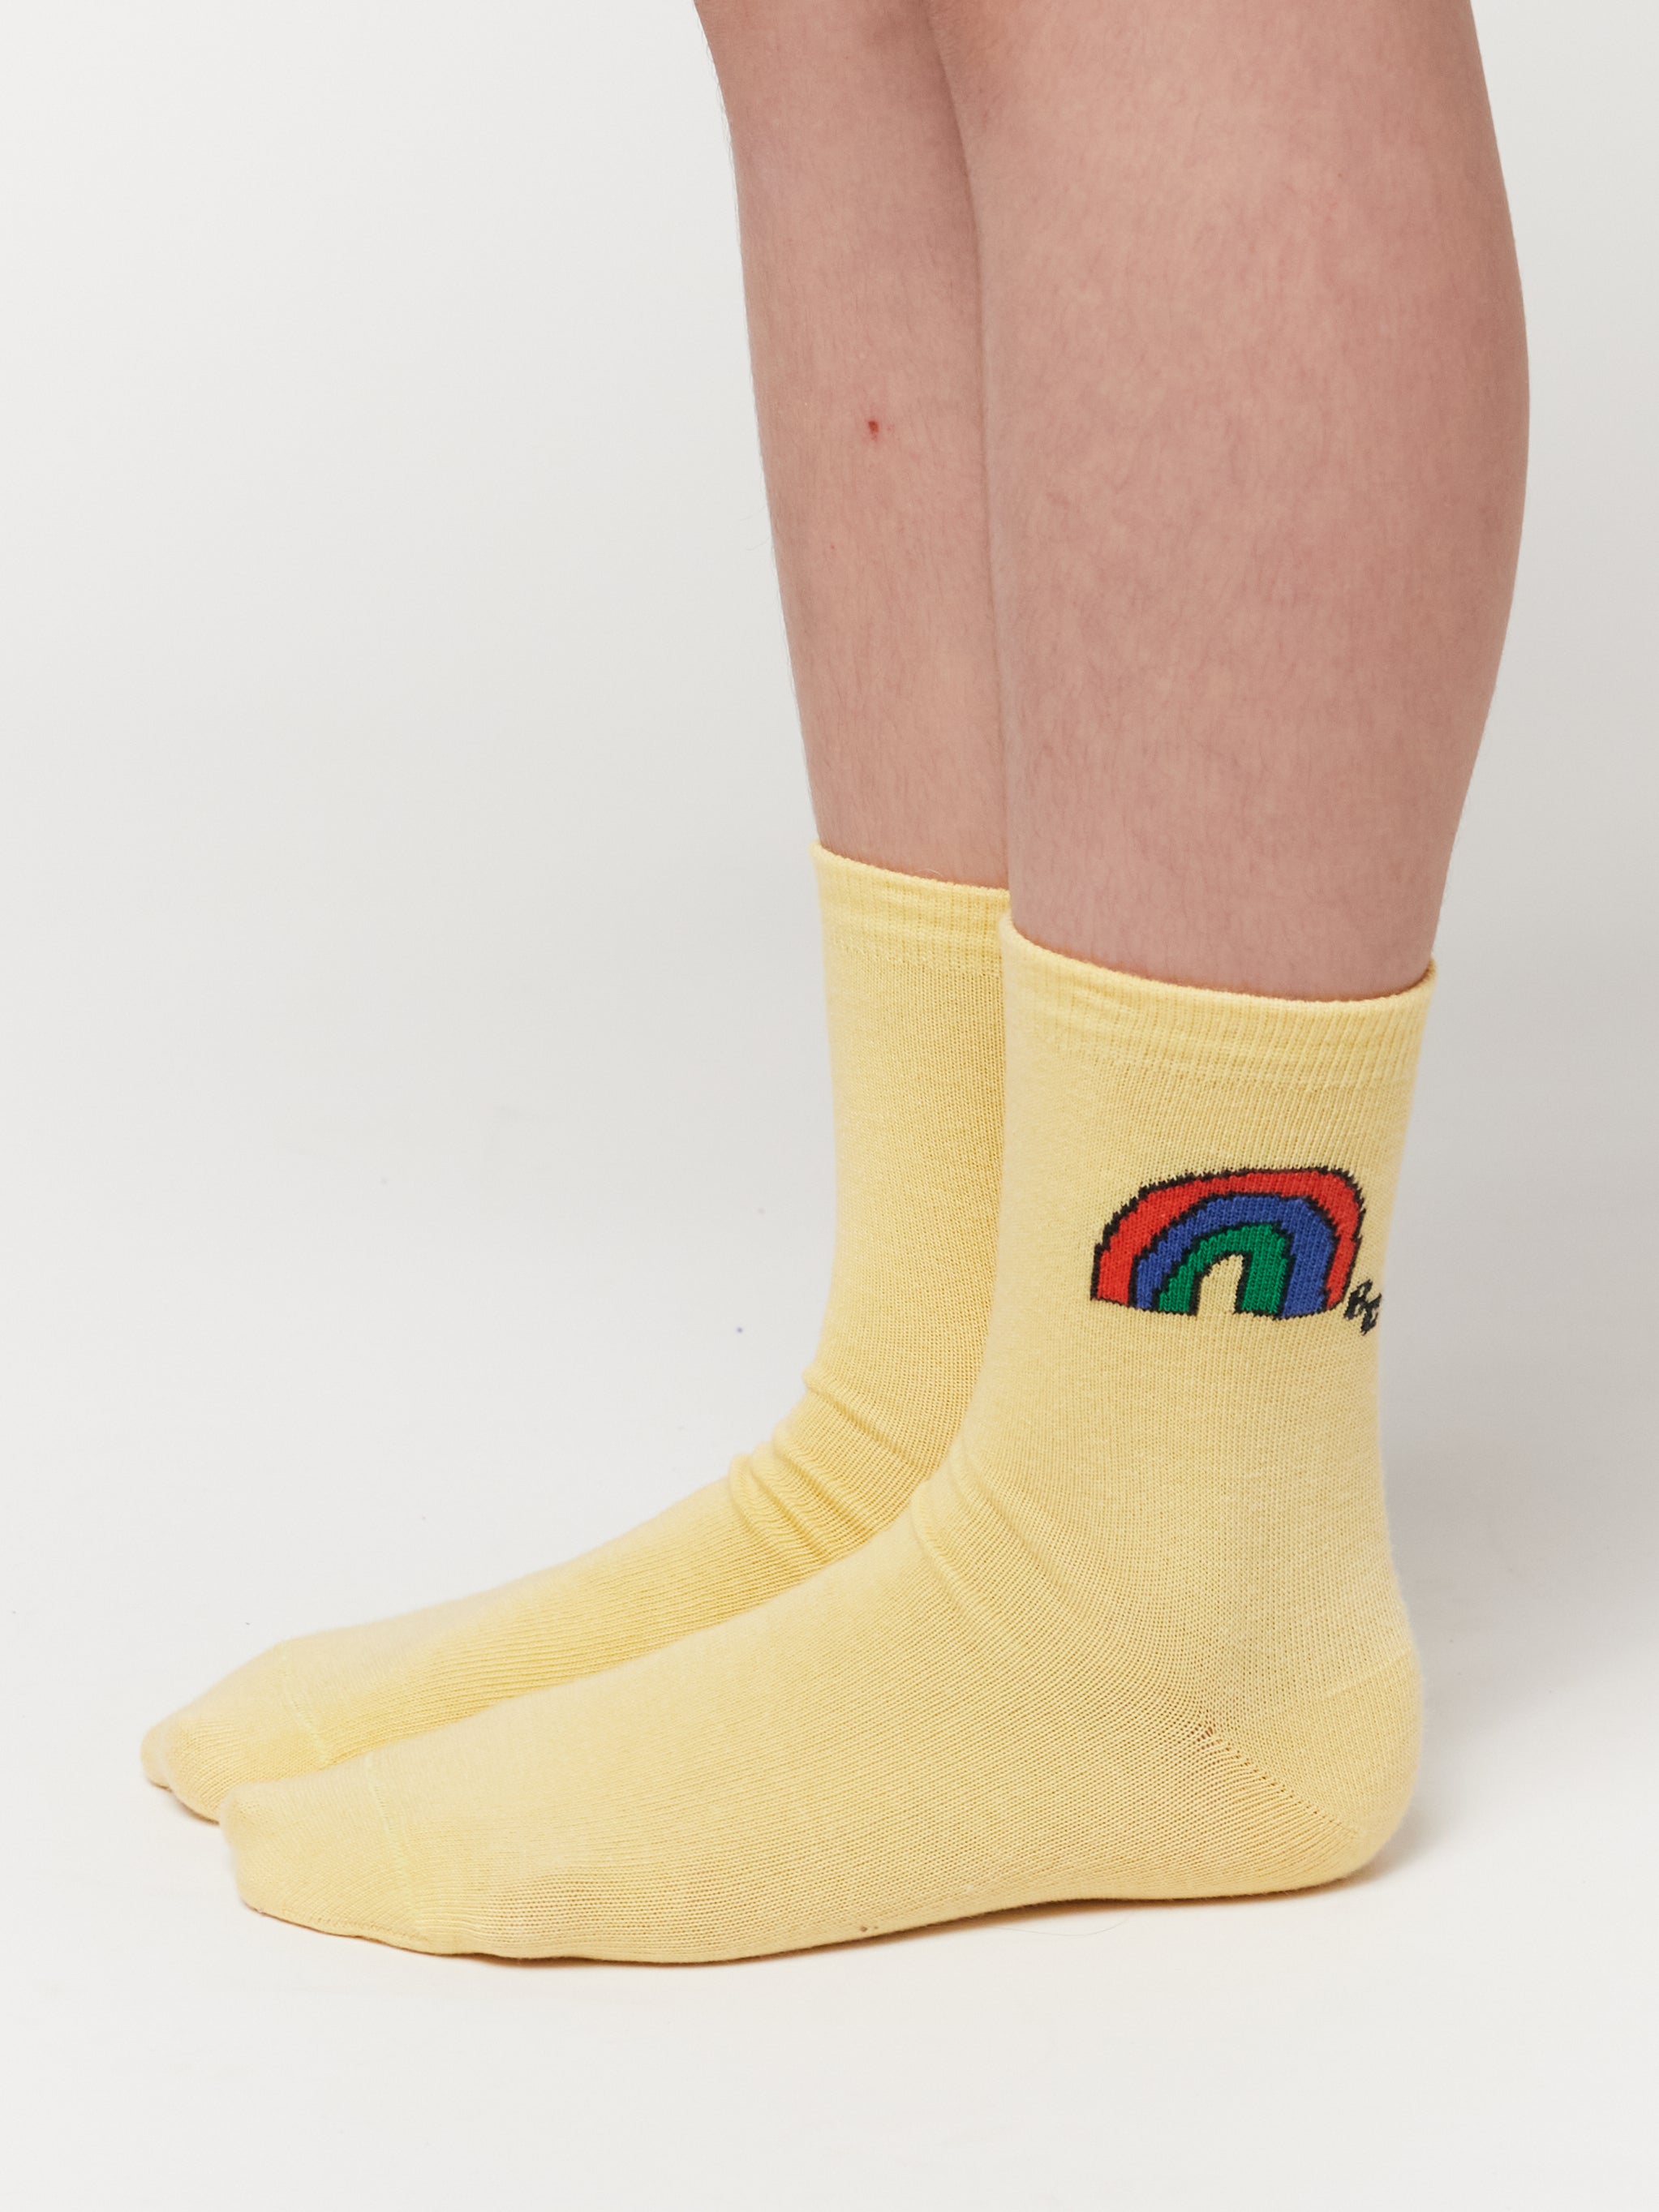 NEW Bobo Choses | Rainbow & Ribbon Bow All Over short socks pack x 2